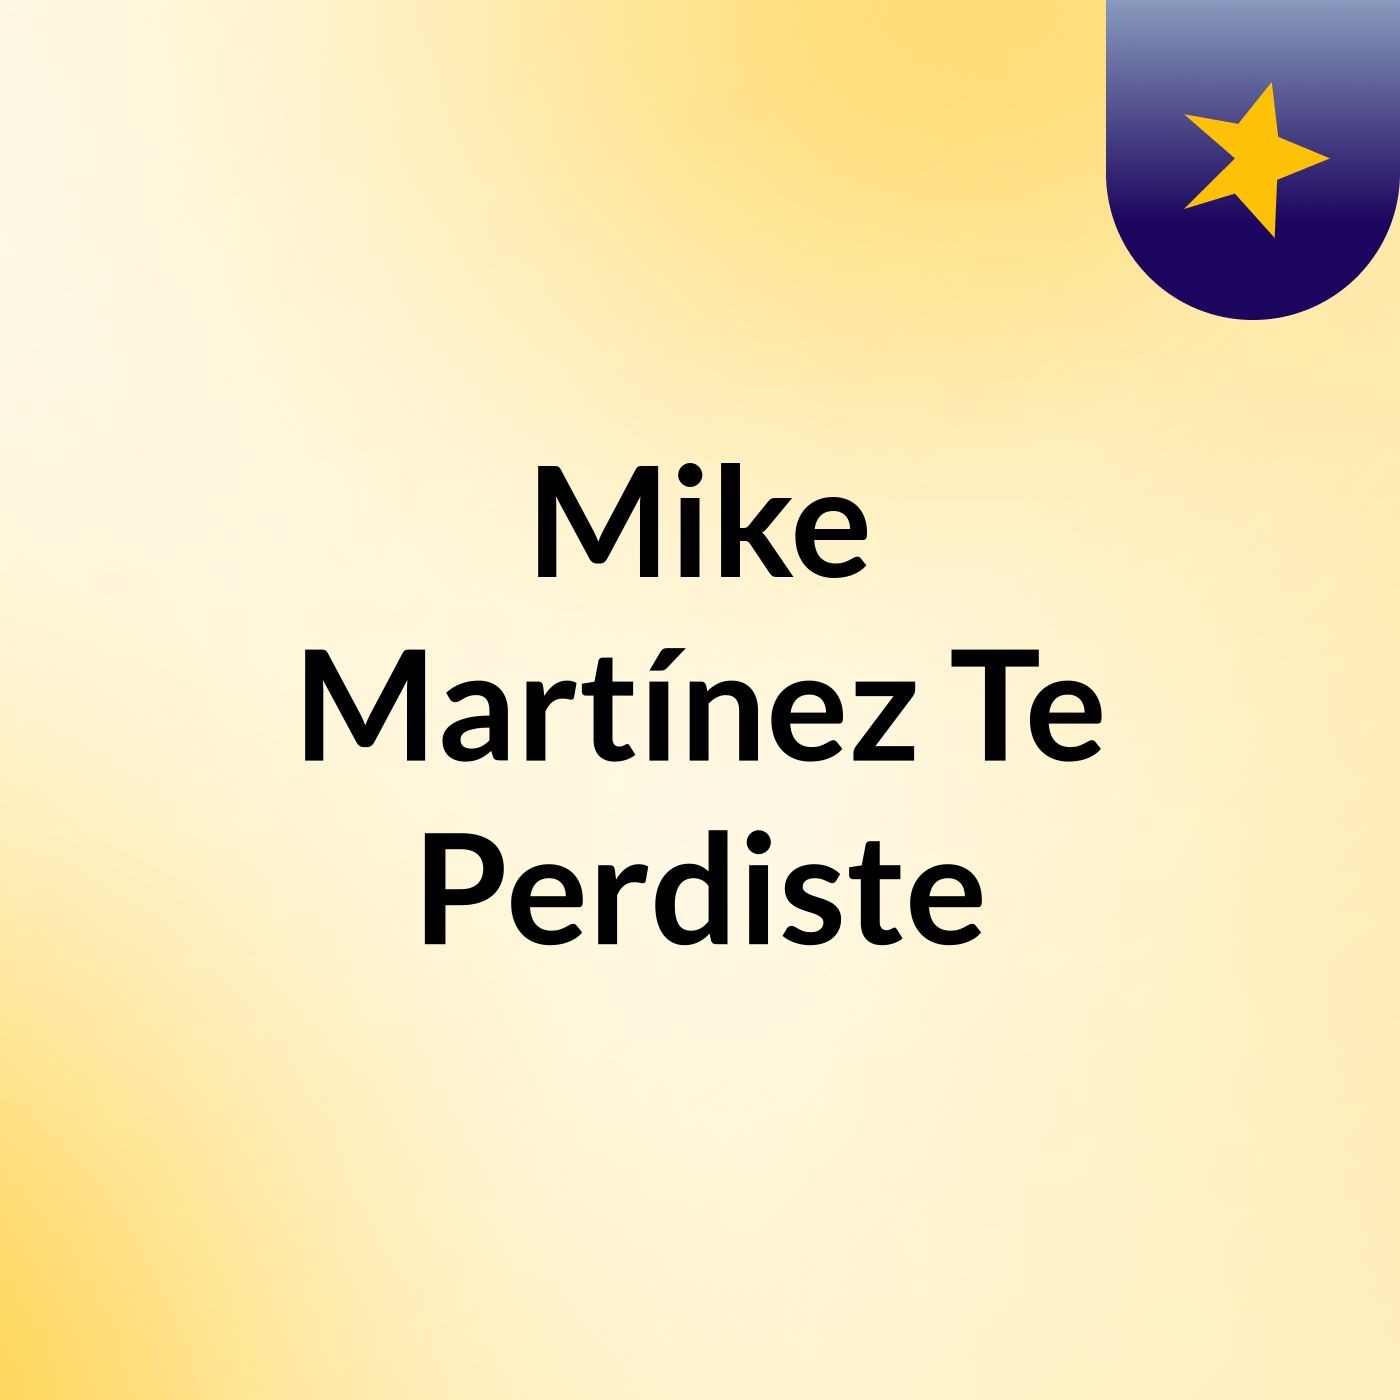 Mike Martínez' Te Perdiste